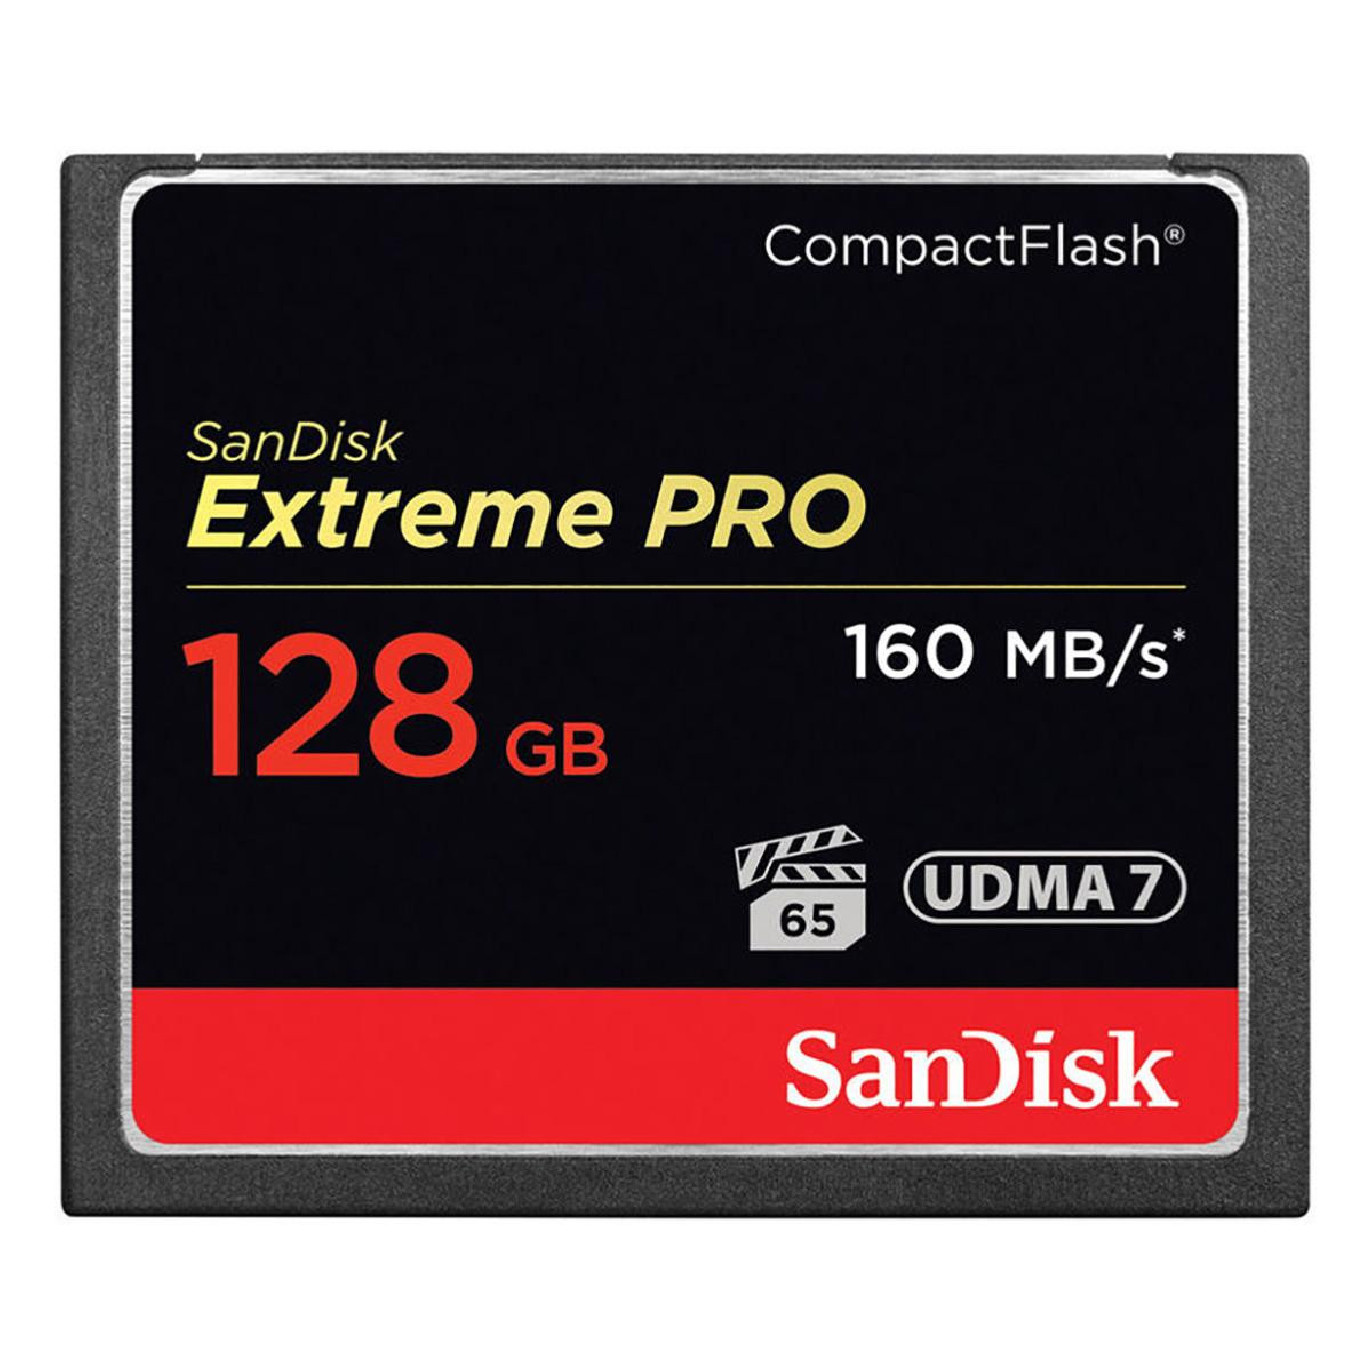 Sandisk carte Compact Flash Extreme Pro (160MB/s) 128GO - Prophot